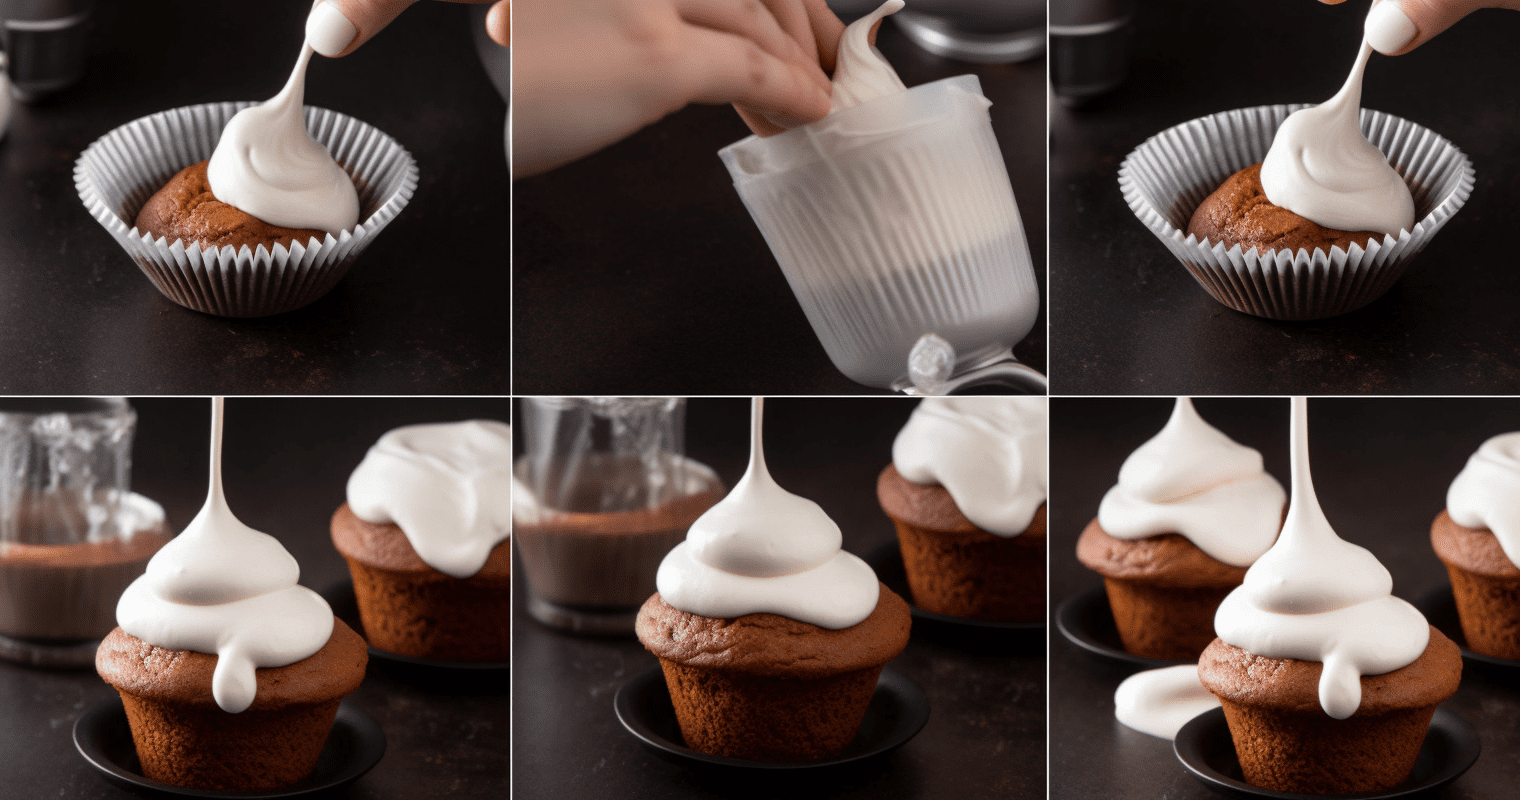 Vegan Gingerbread Cupcakes Cooking Instructions